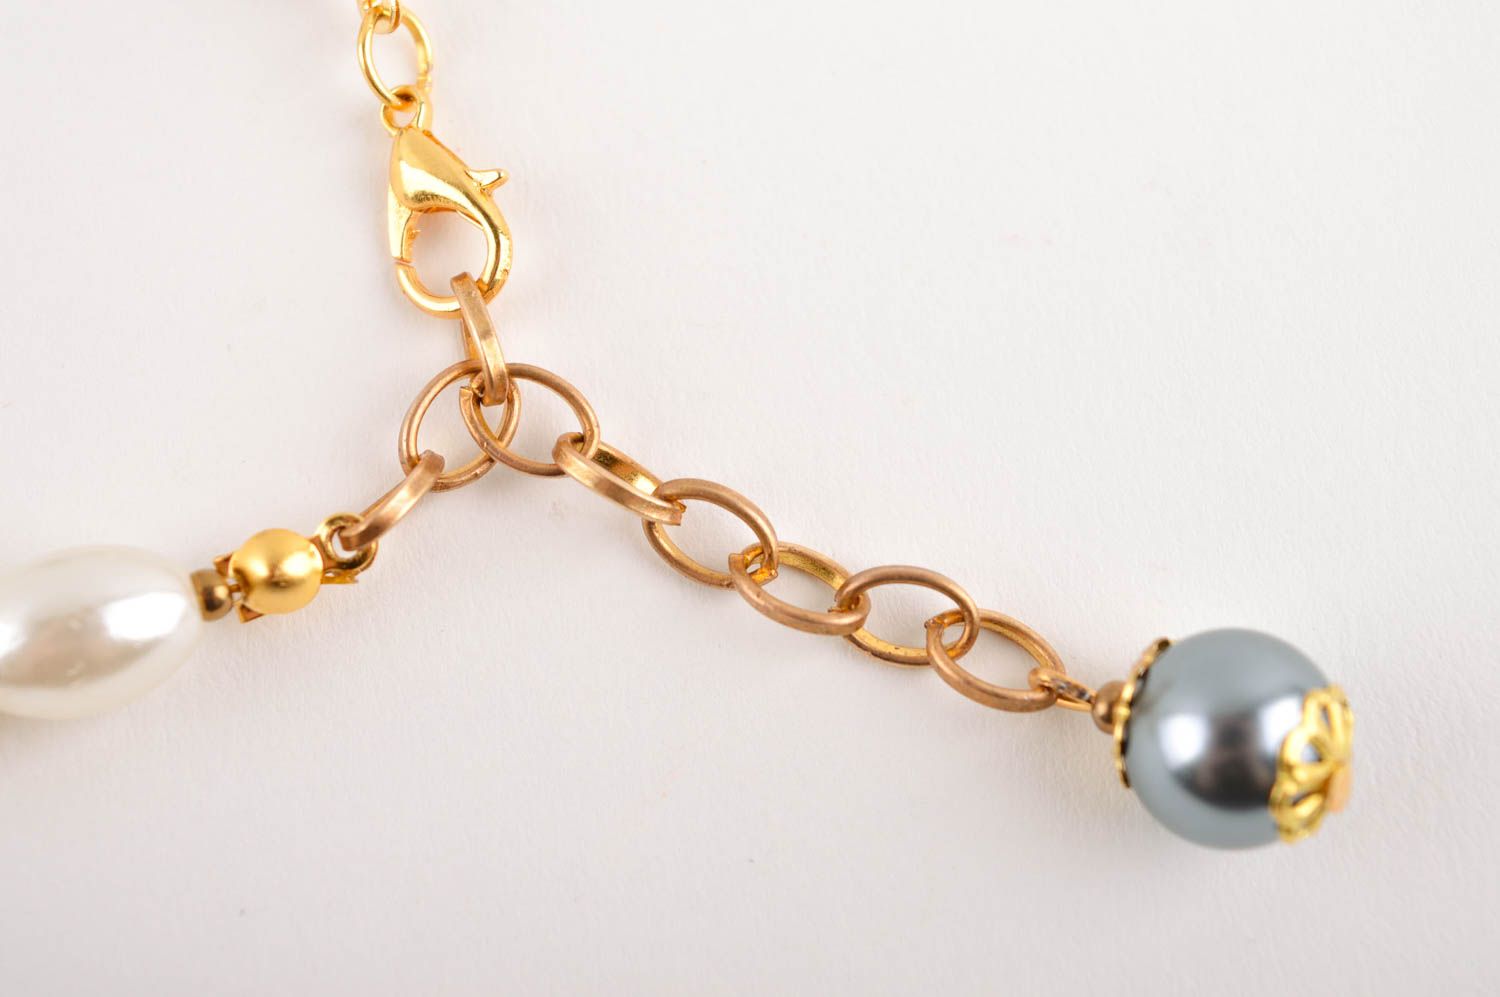 Handmade bracelet on chain evening accessory stylish jewelry present for women photo 4